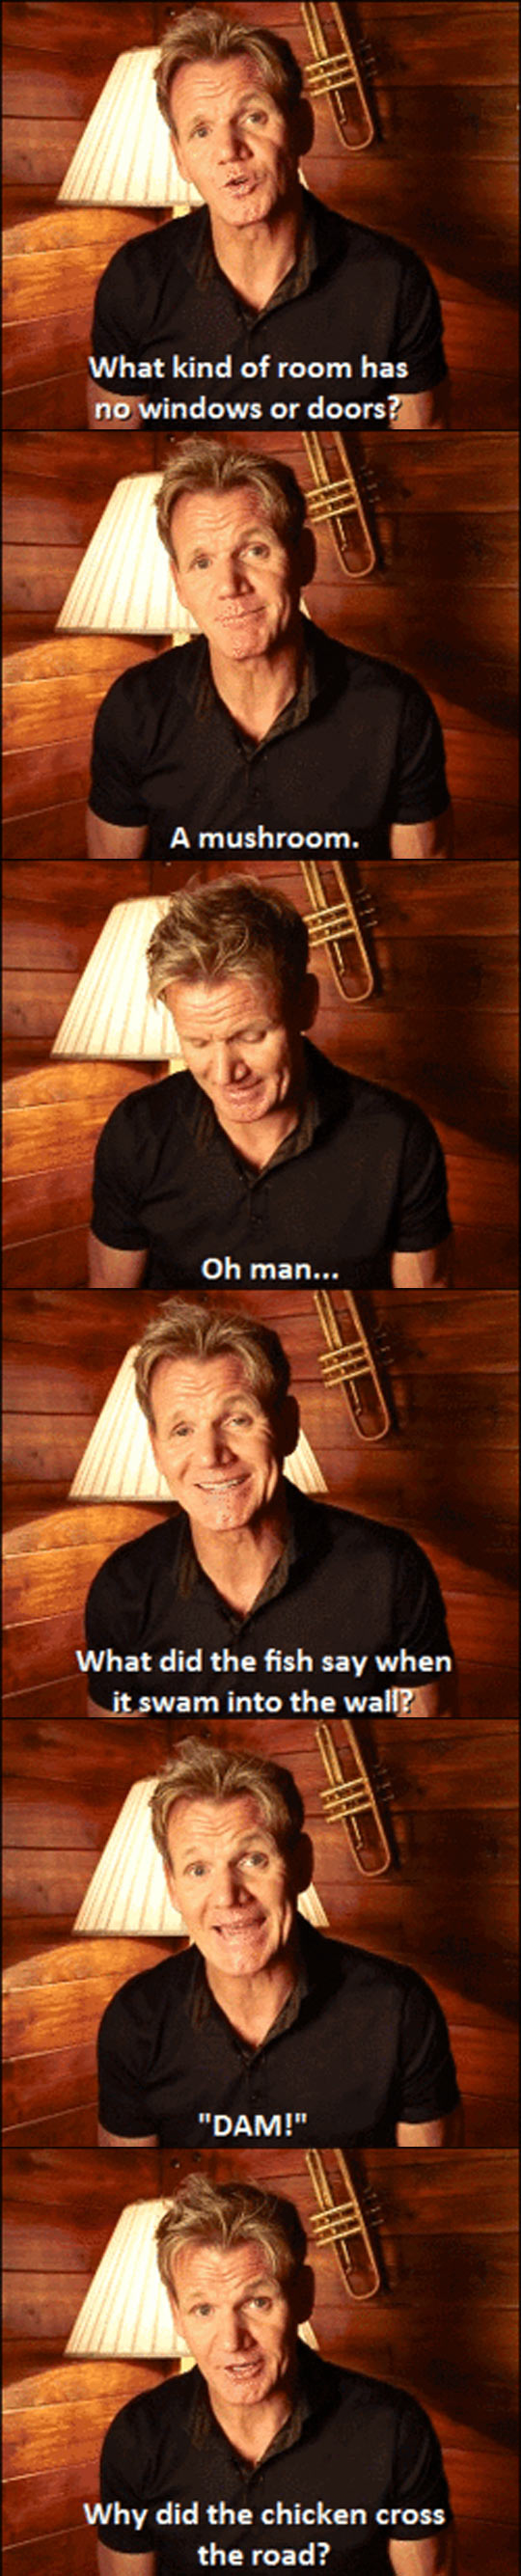 Gordon Ramsay joking around...